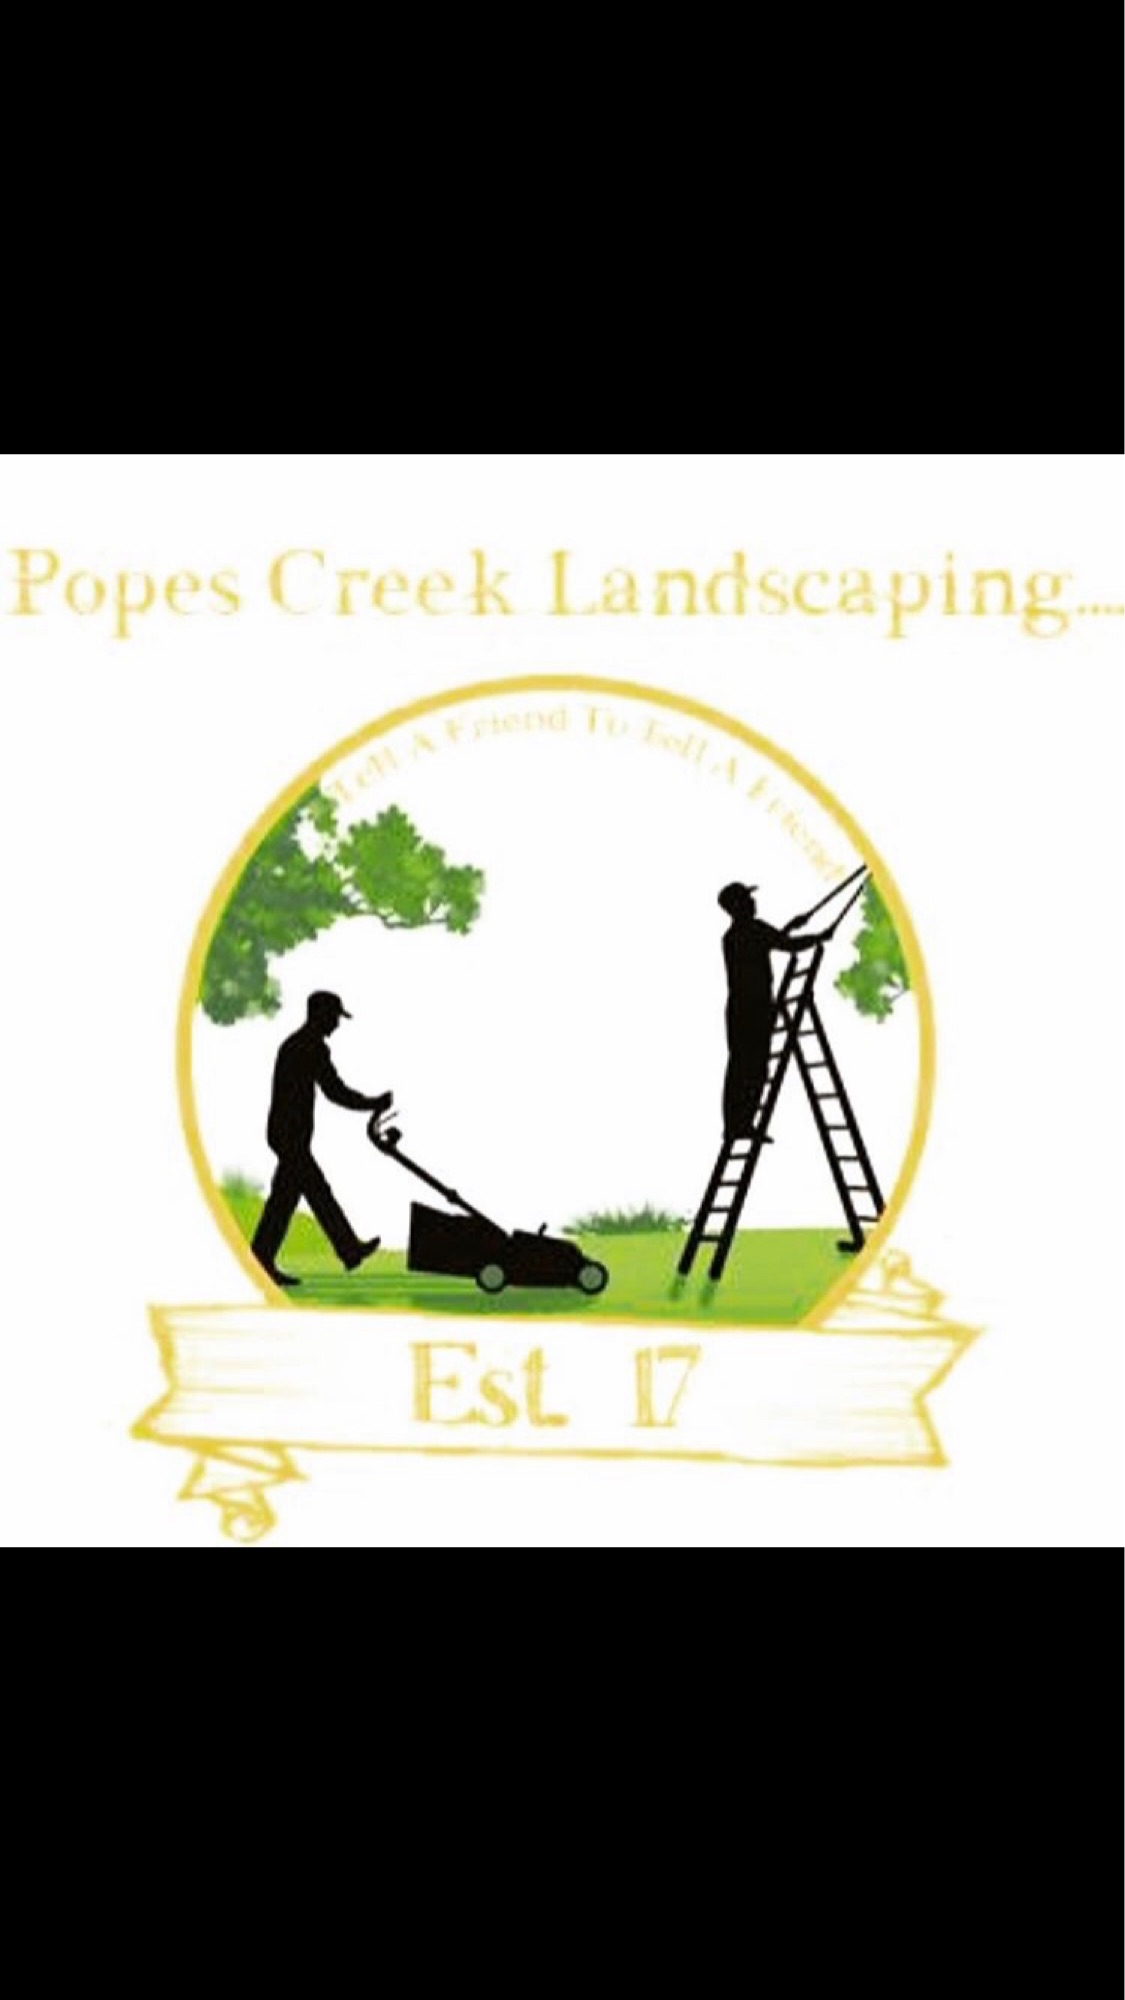 Pope Creek Landscaping Logo